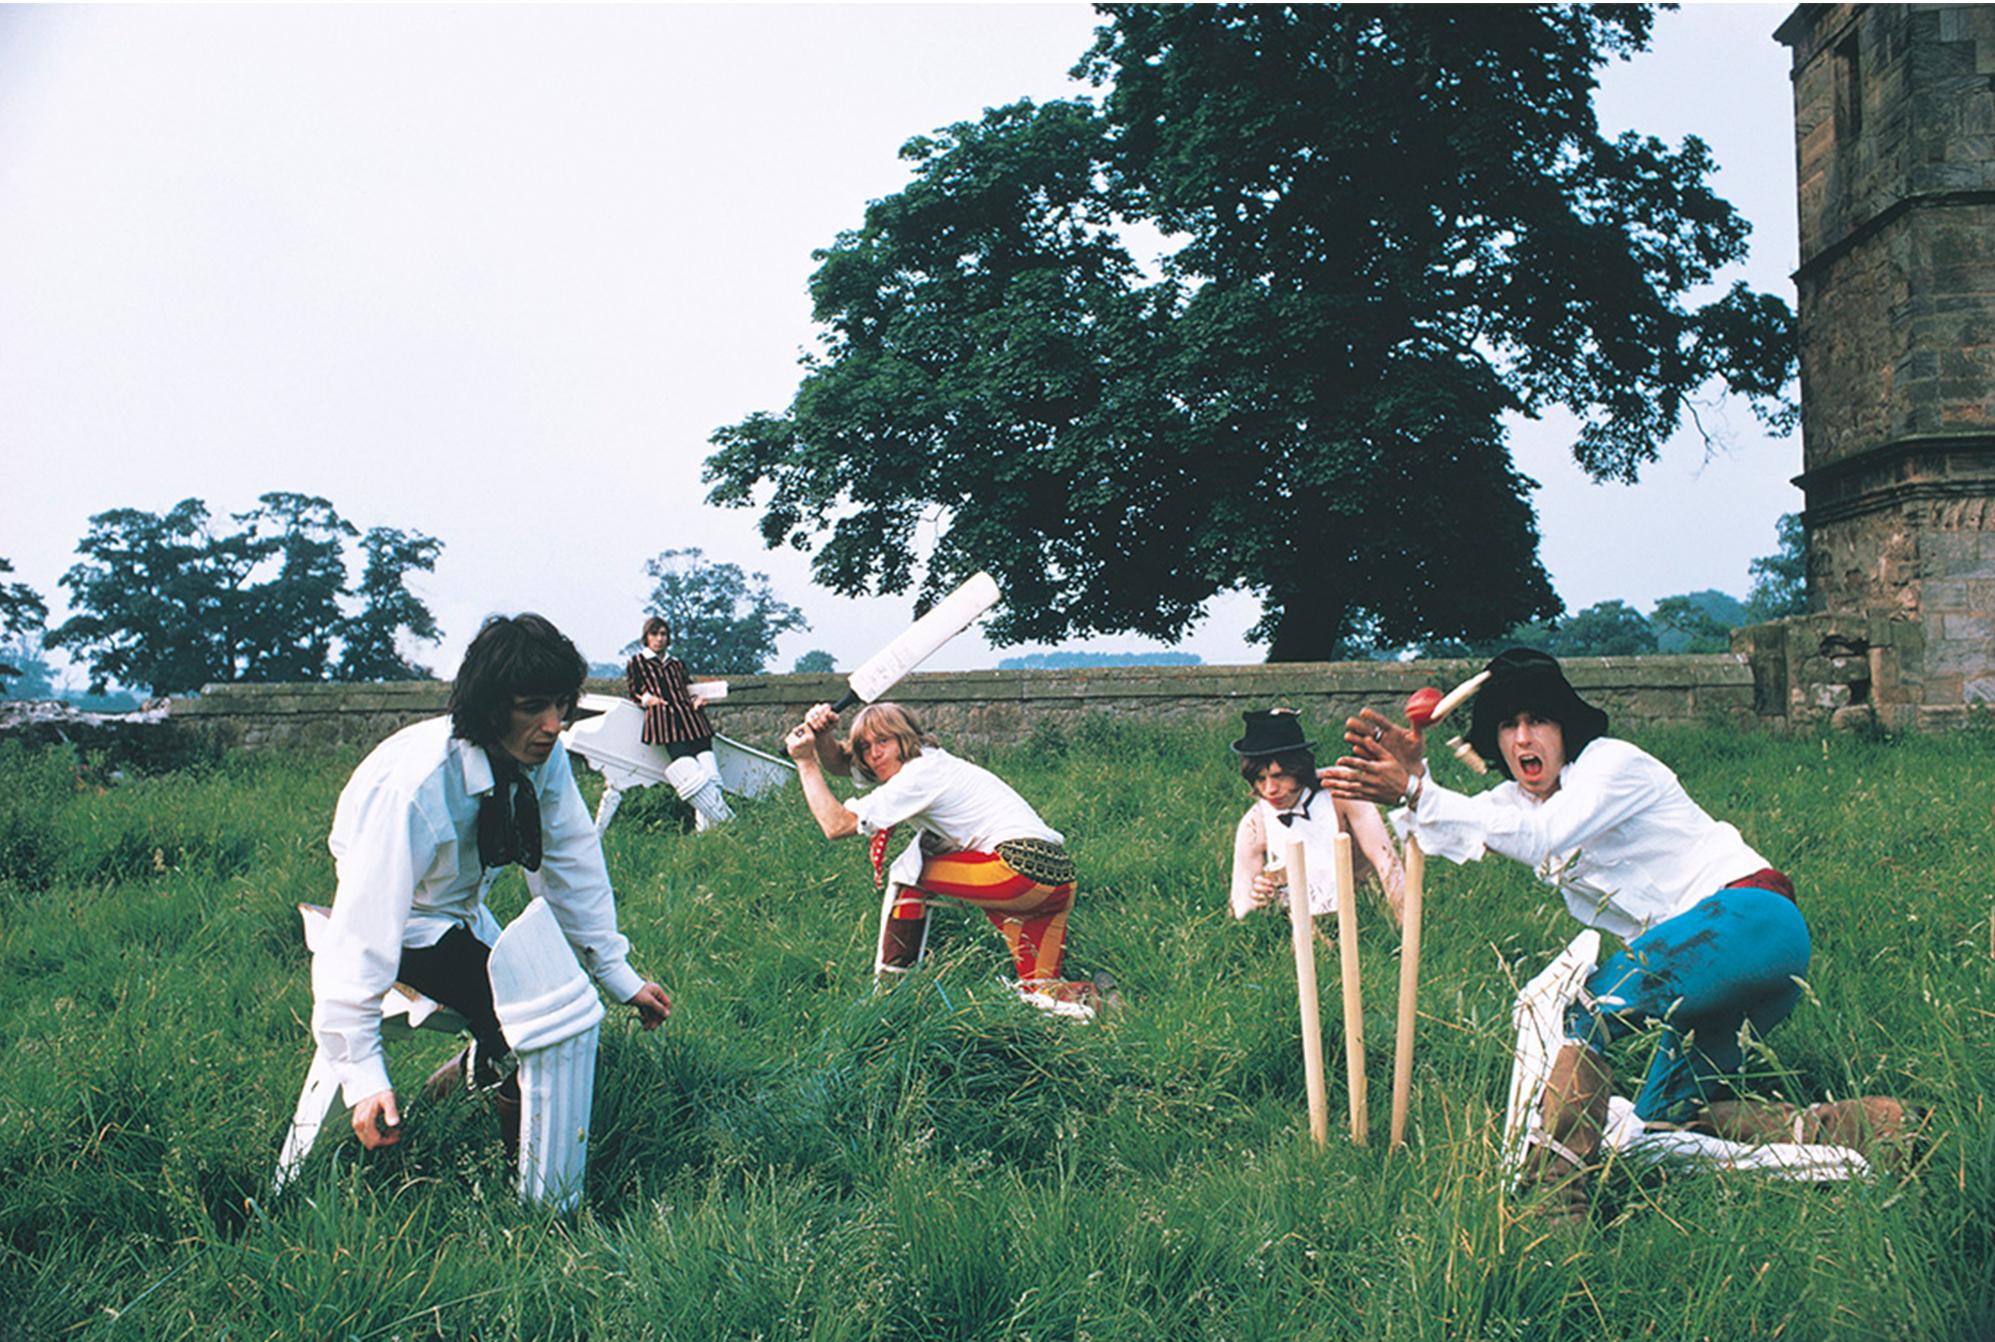 Michael Joseph Portrait Photograph - The Rolling Stones "Stones Playing Cricket" London 1968